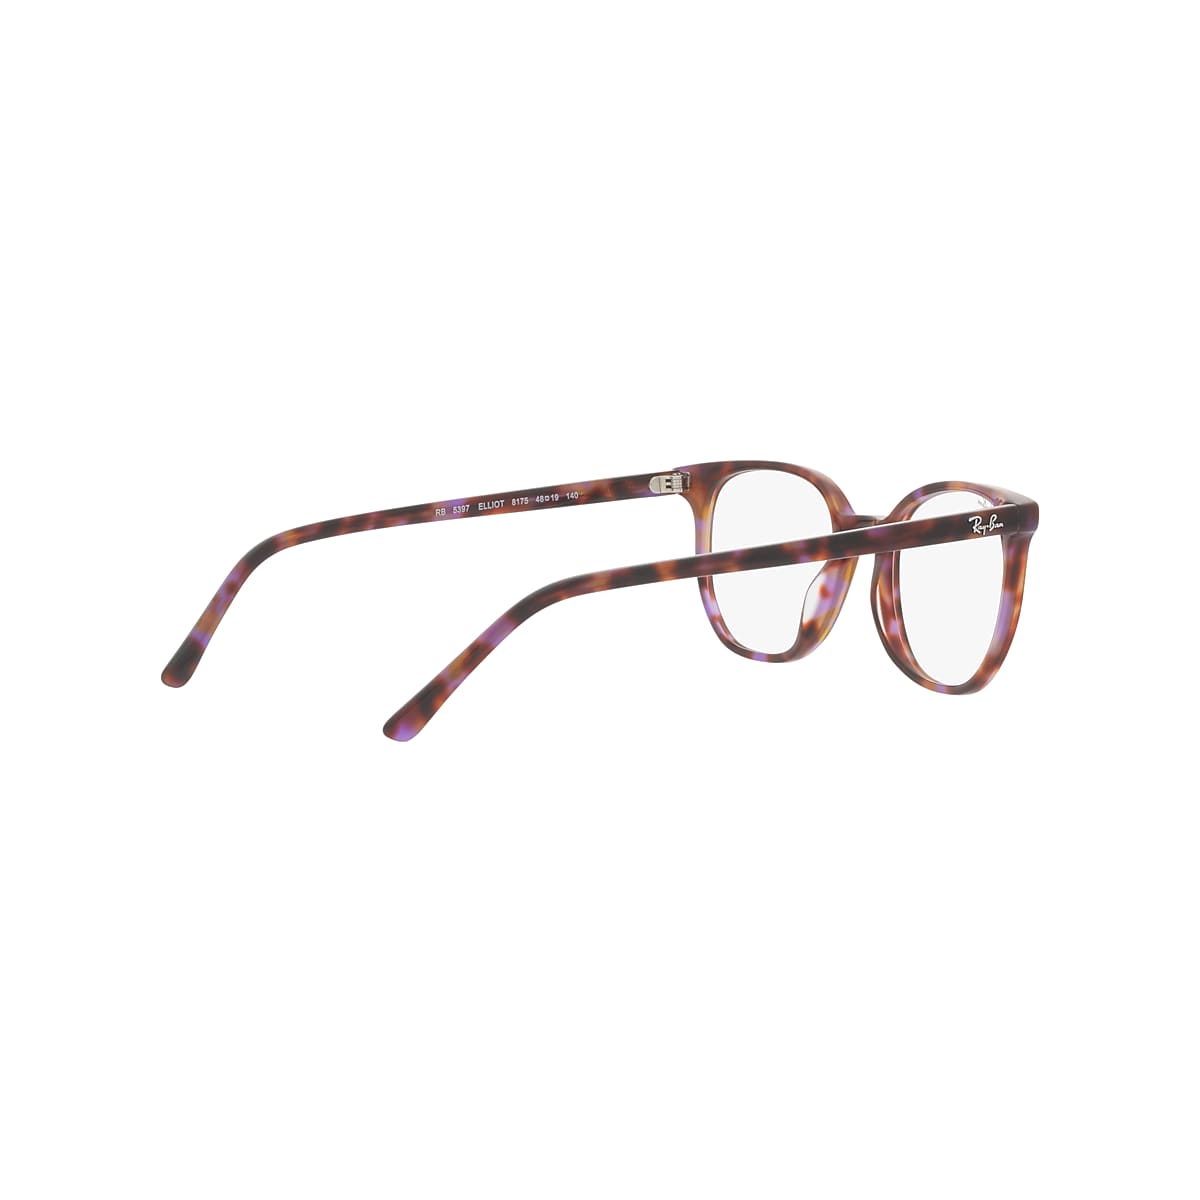 Elliot Optics Eyeglasses with Brown & Violet Havana Frame | Ray-Ban®